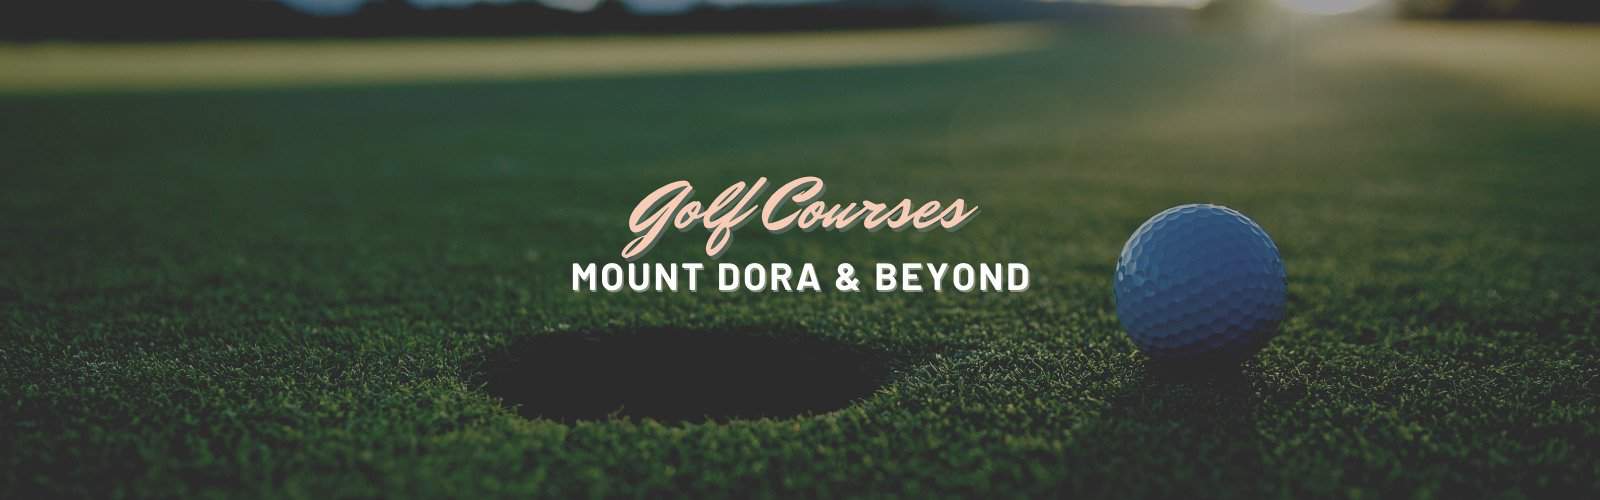 Golf Courses Mount Dora